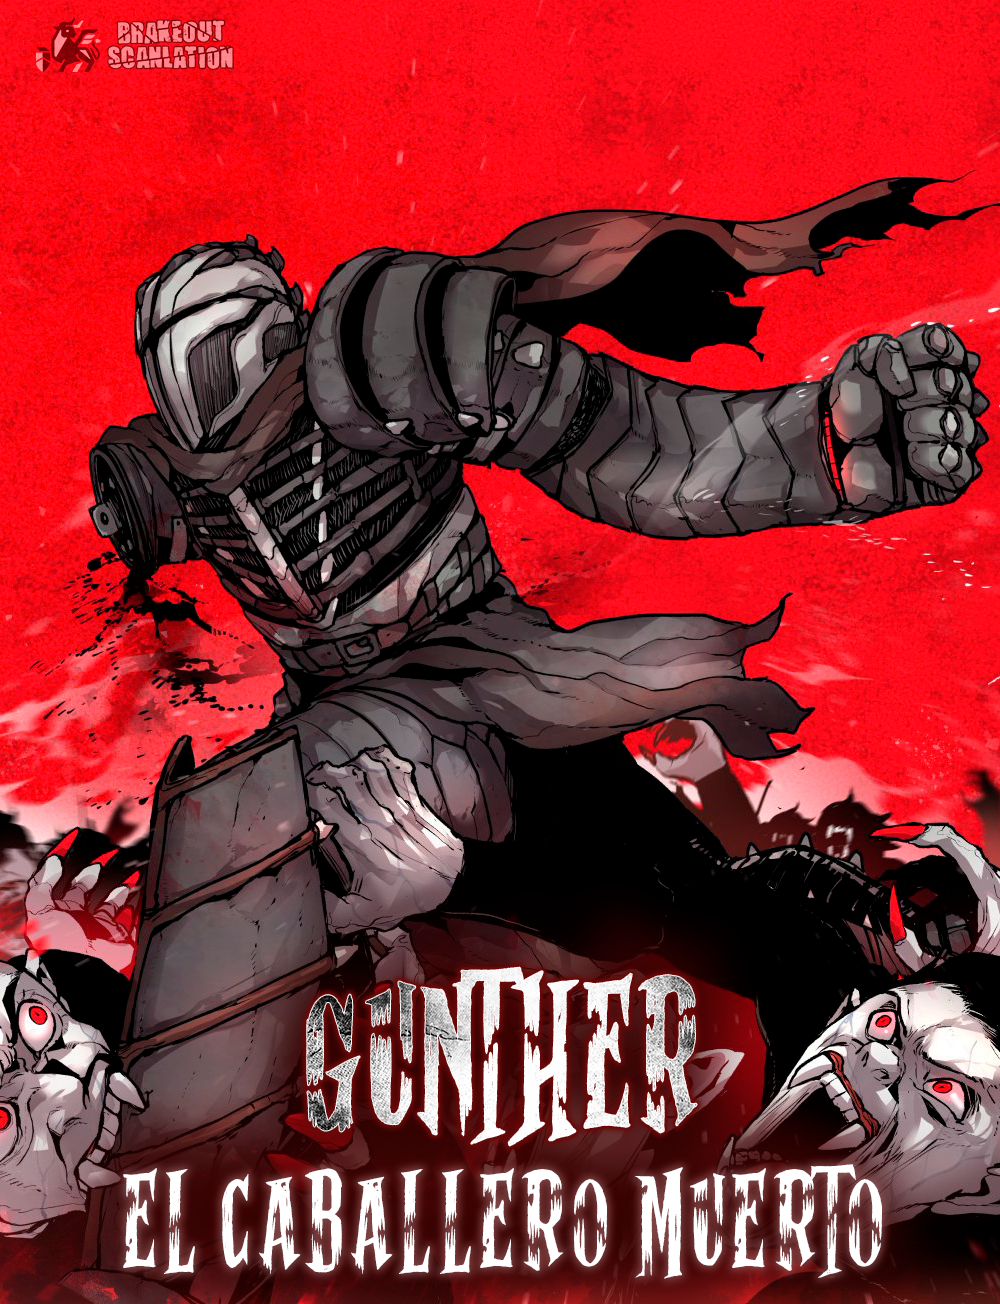 El Caballero Muerto Gunther